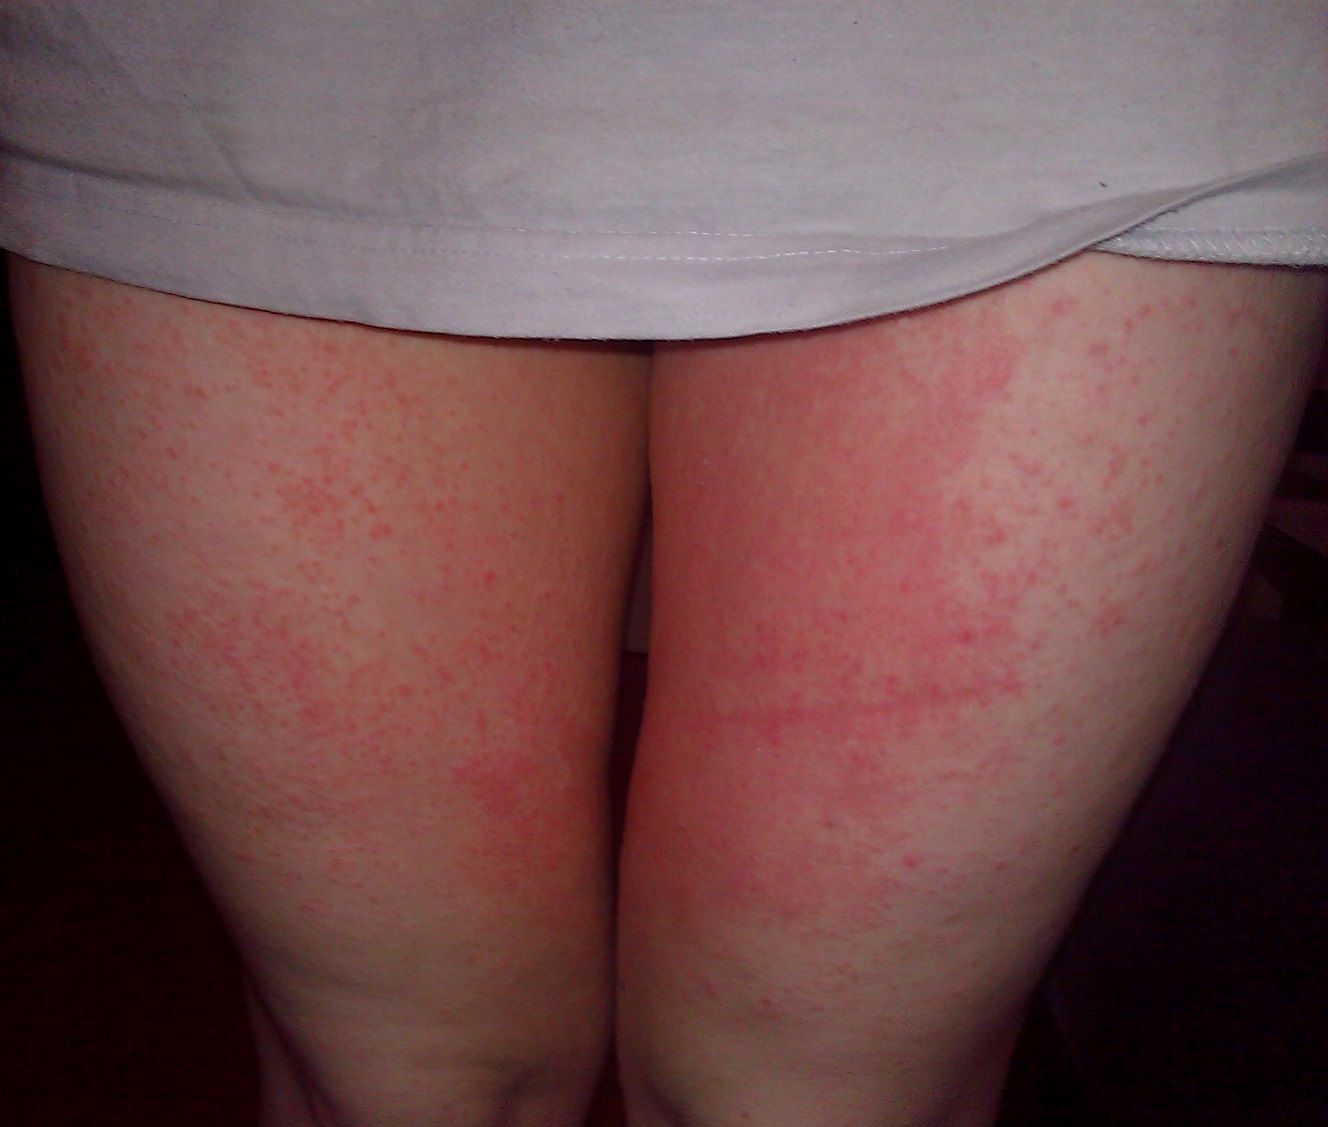 heat rash thighs